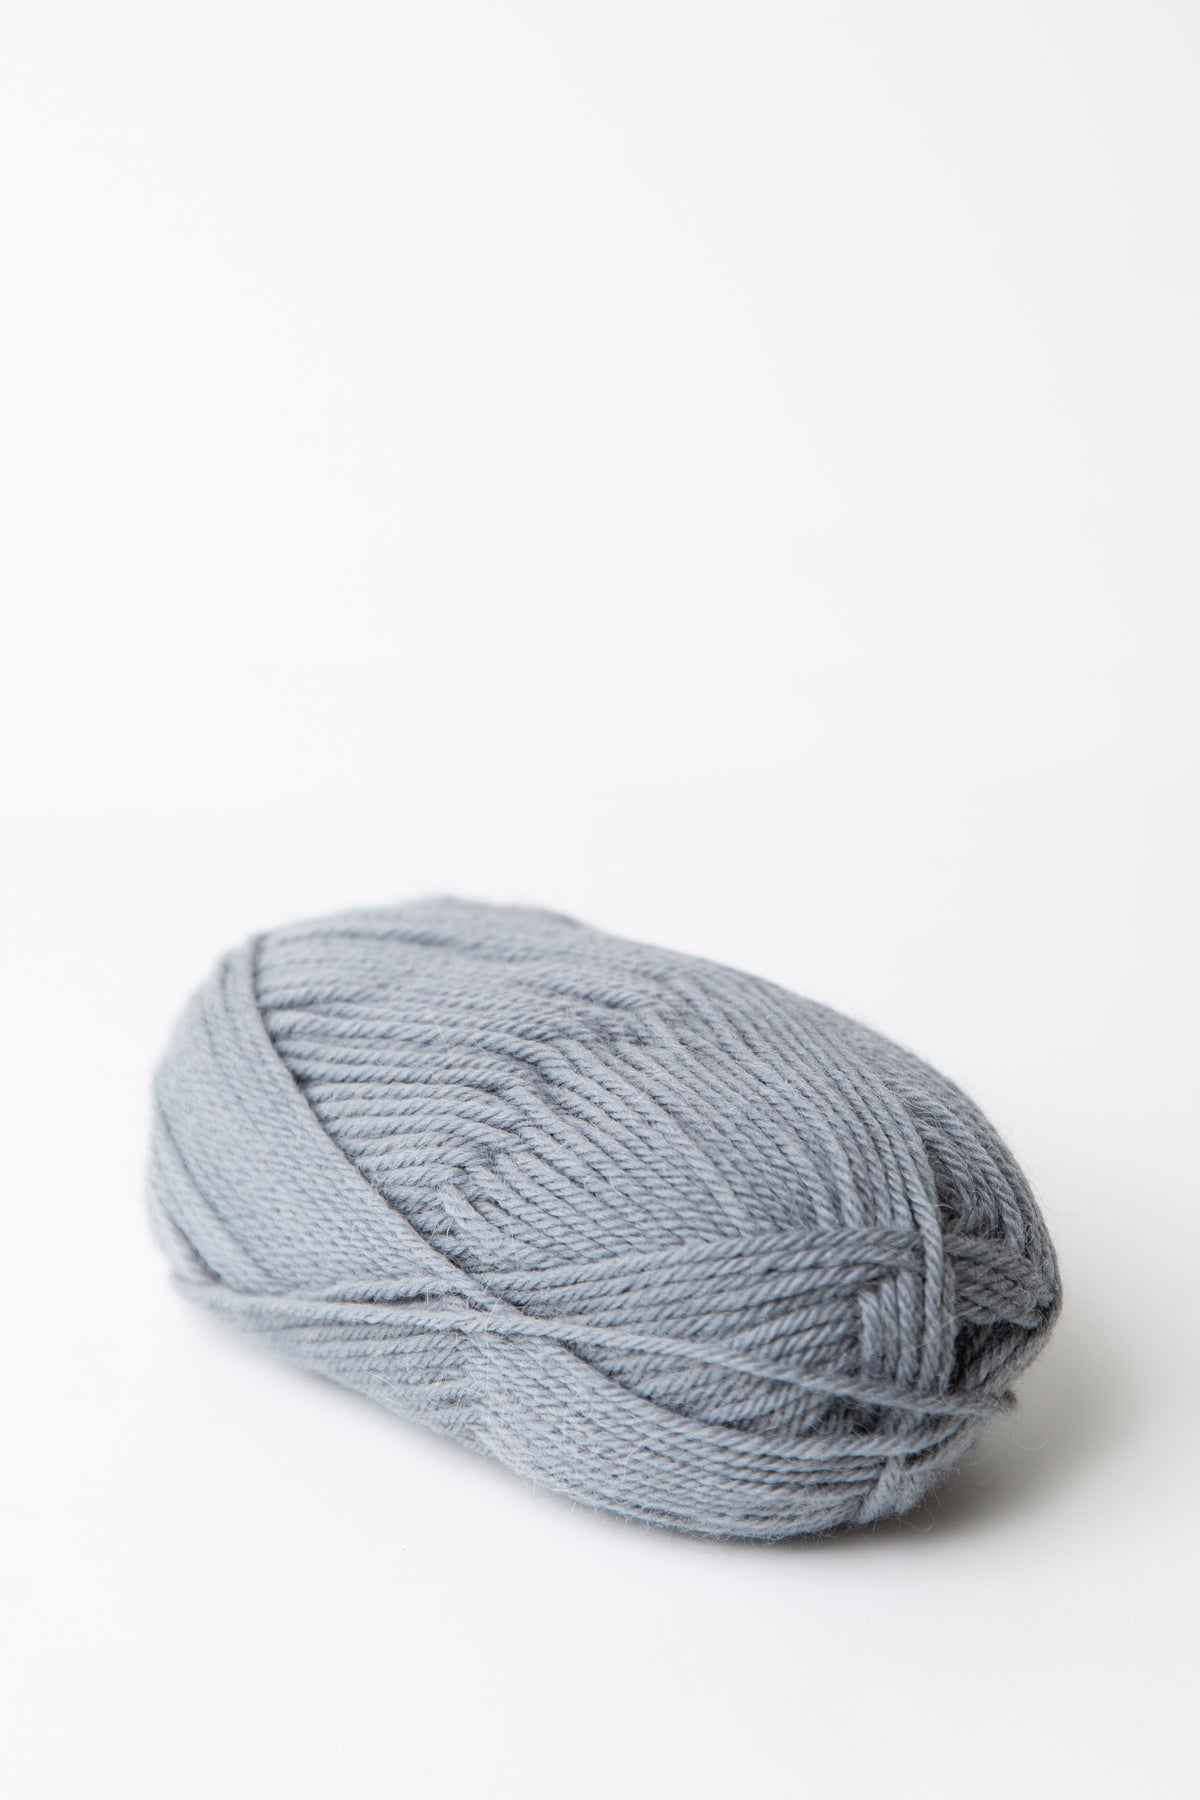 Drops Lima - White (1101) - Dk | Light Worsted Knitting Wool & Yarn